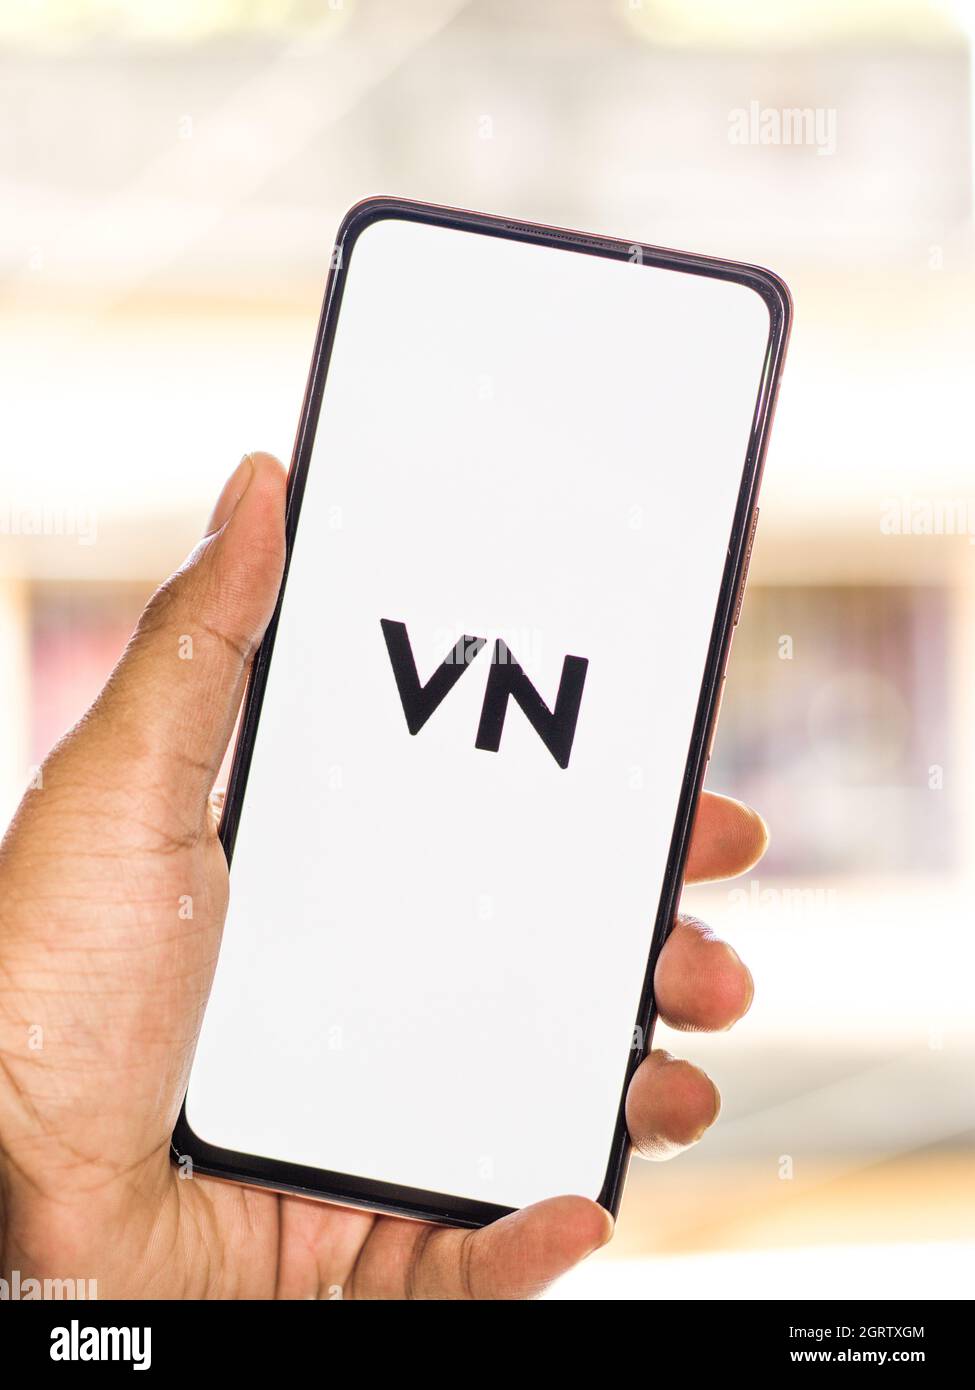 West Bangal, India - September 28, 2021 : VN logo on phone screen stock image. Stock Photo